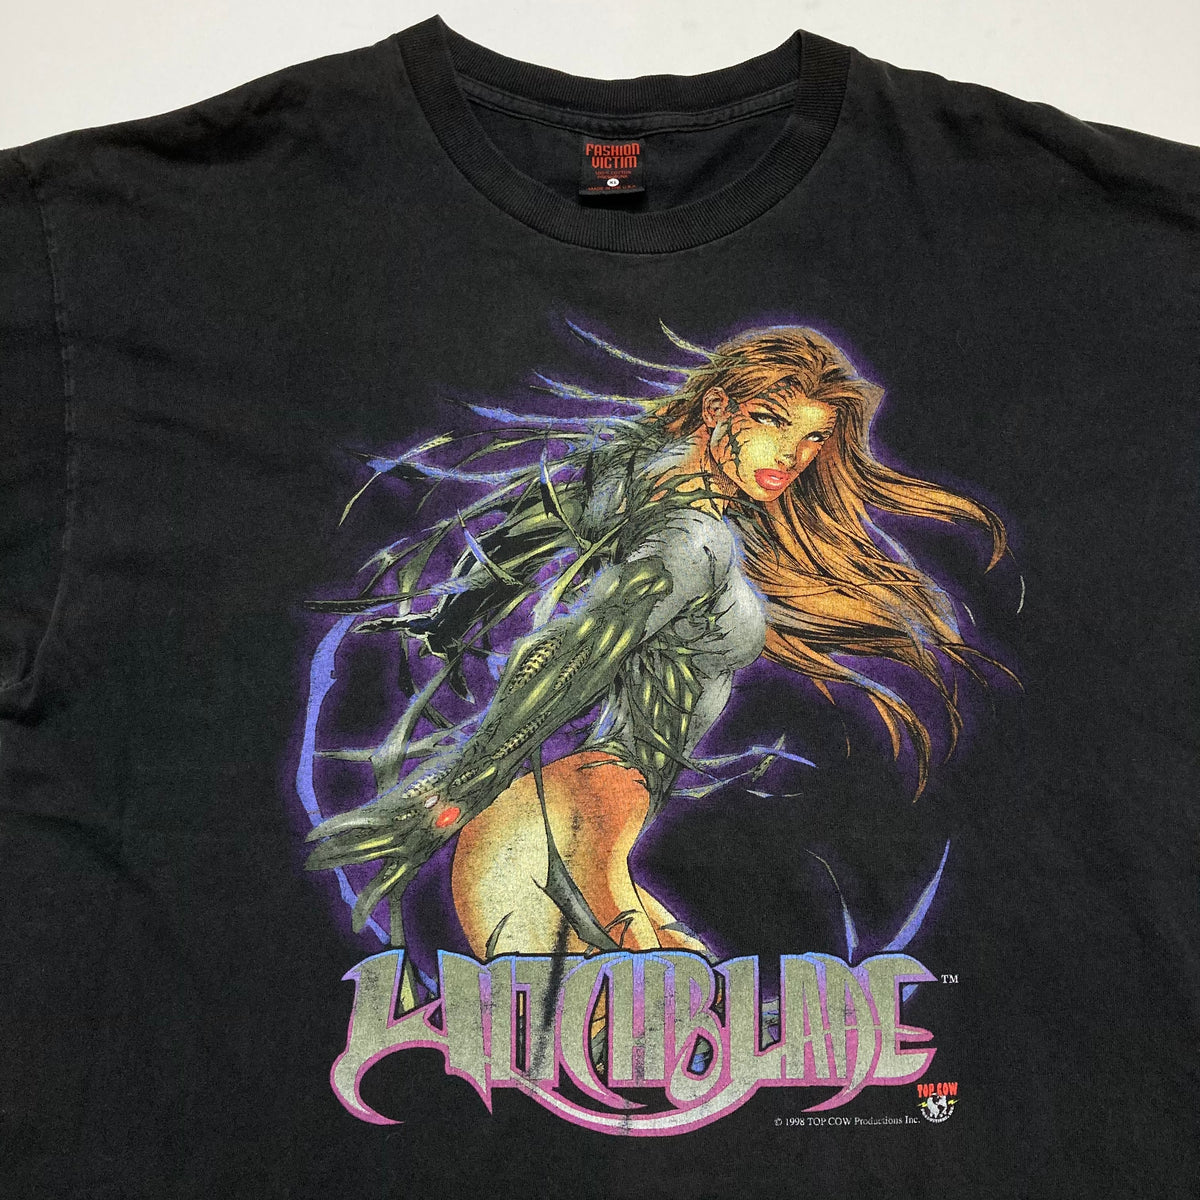 Witch Blade FASHION VICTIM T-shirt ©︎1997 odmalihnogu.org